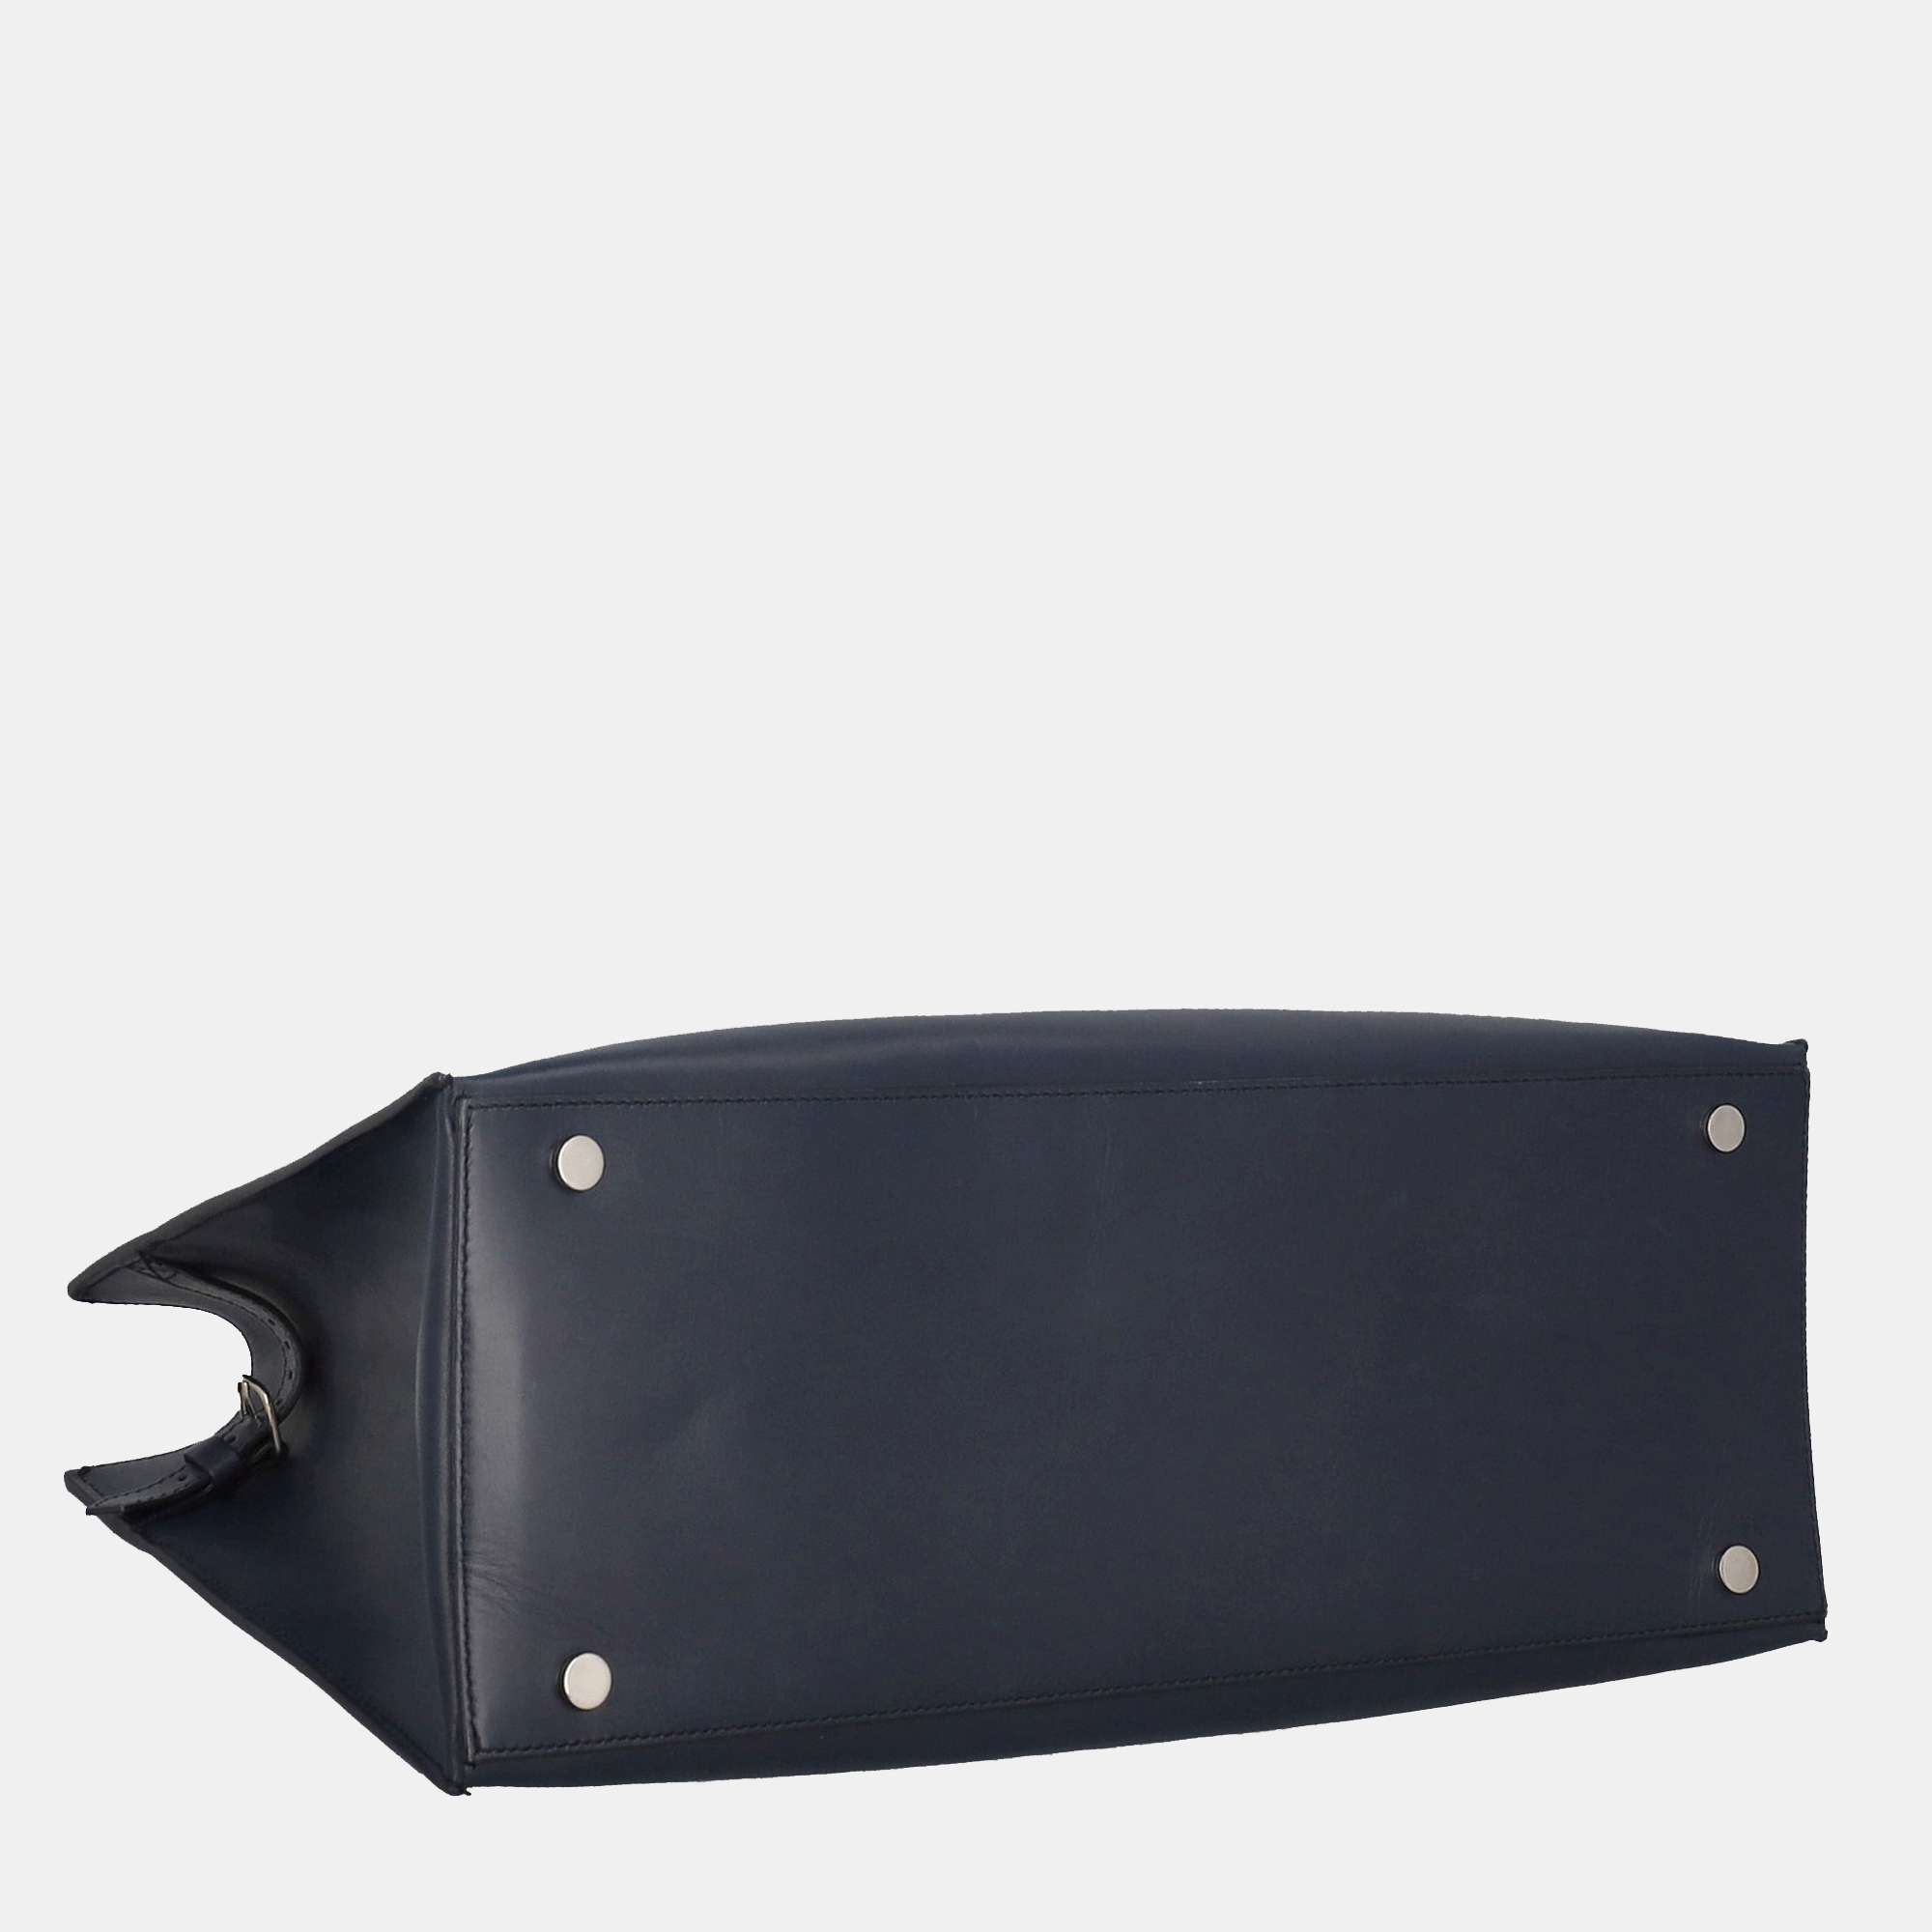 Balenciaga  Women's Leather Tote Bag - Navy - One Size